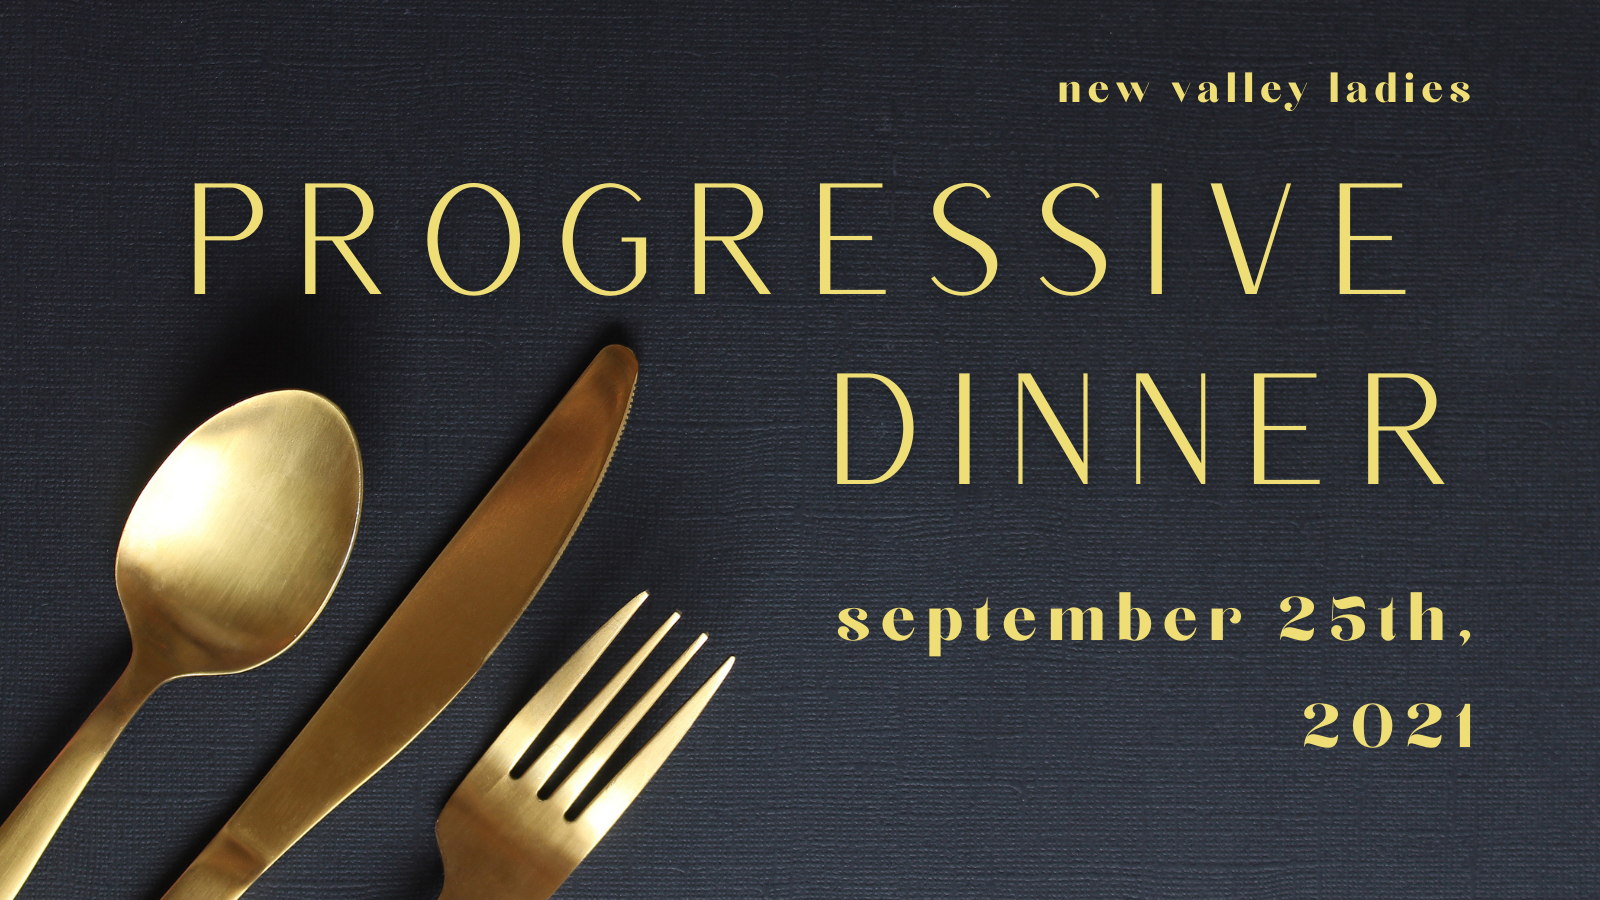 Copy of Progressive Dinner 2021 image